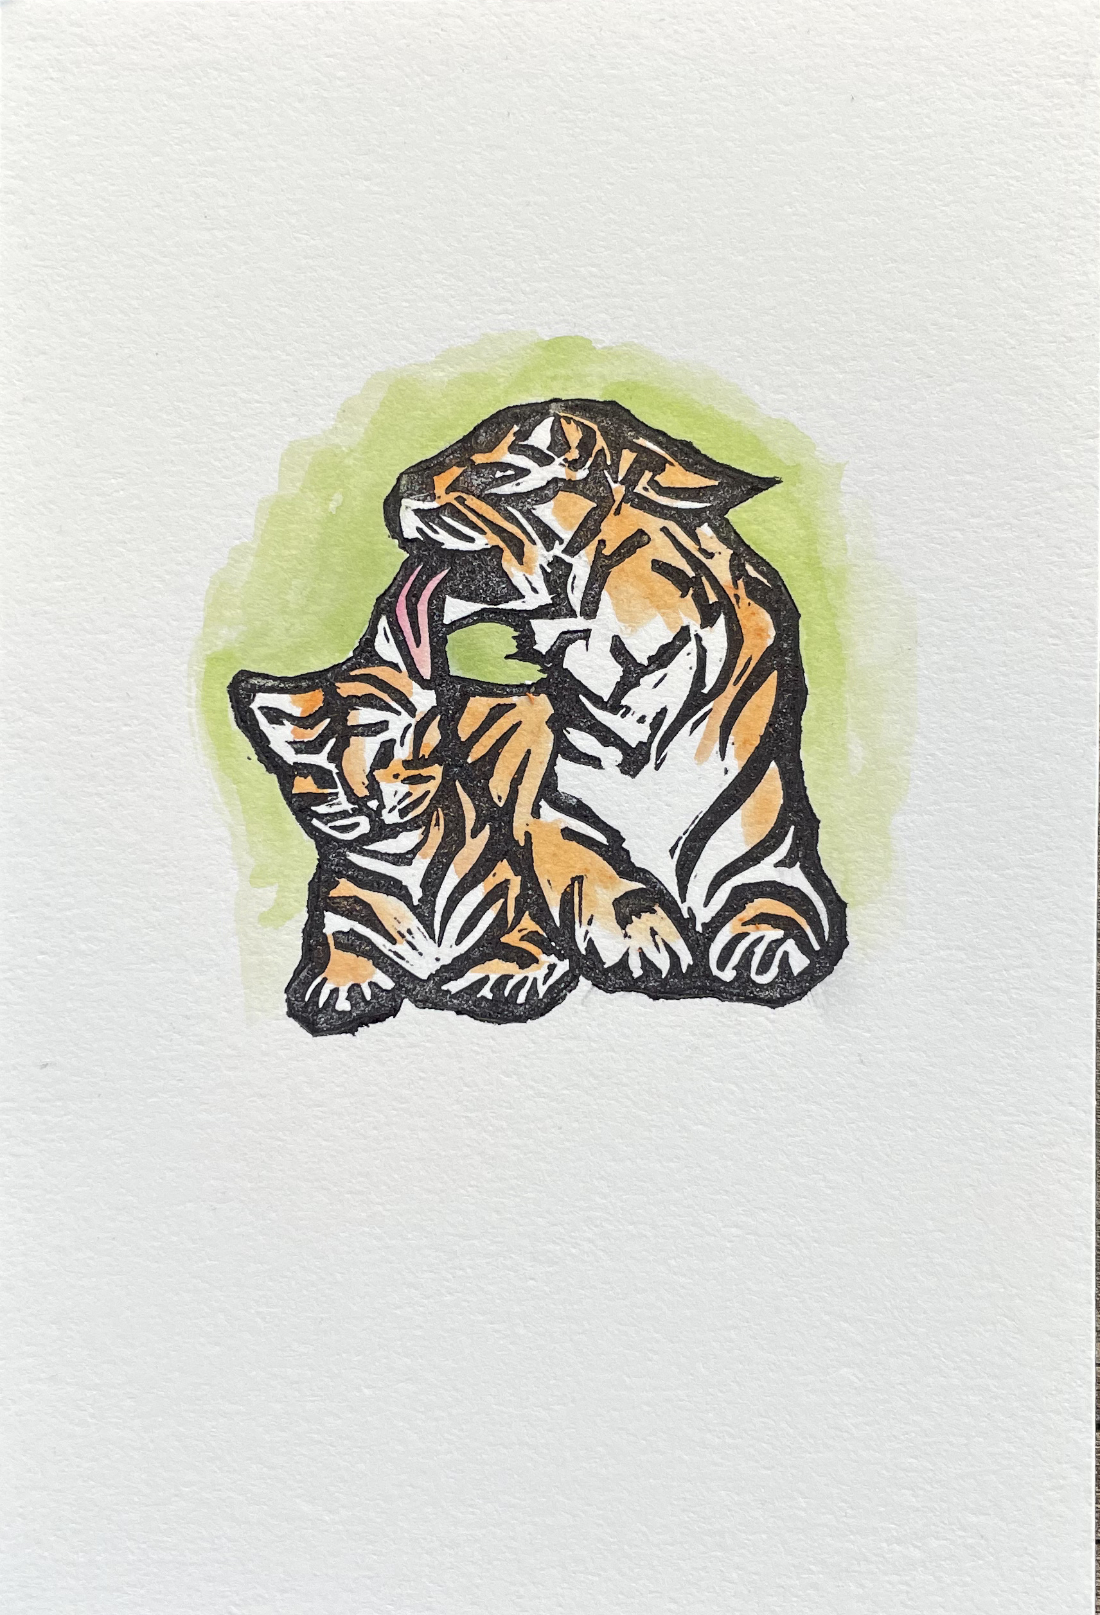 linocut of tiger licking cub